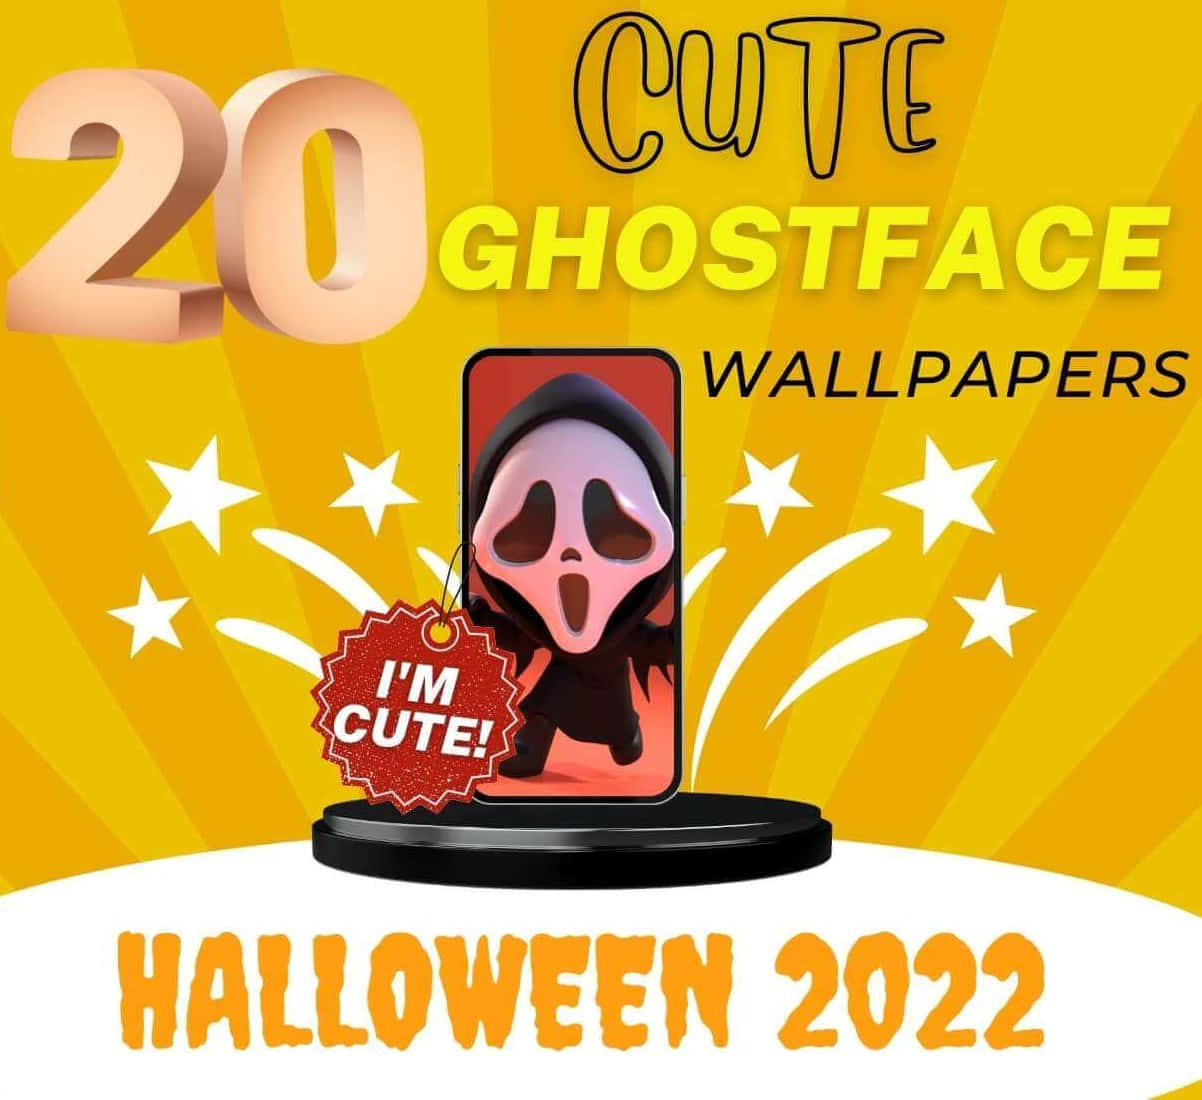 Halloween 2022 Cute Ghostface In Yellow Wallpaper